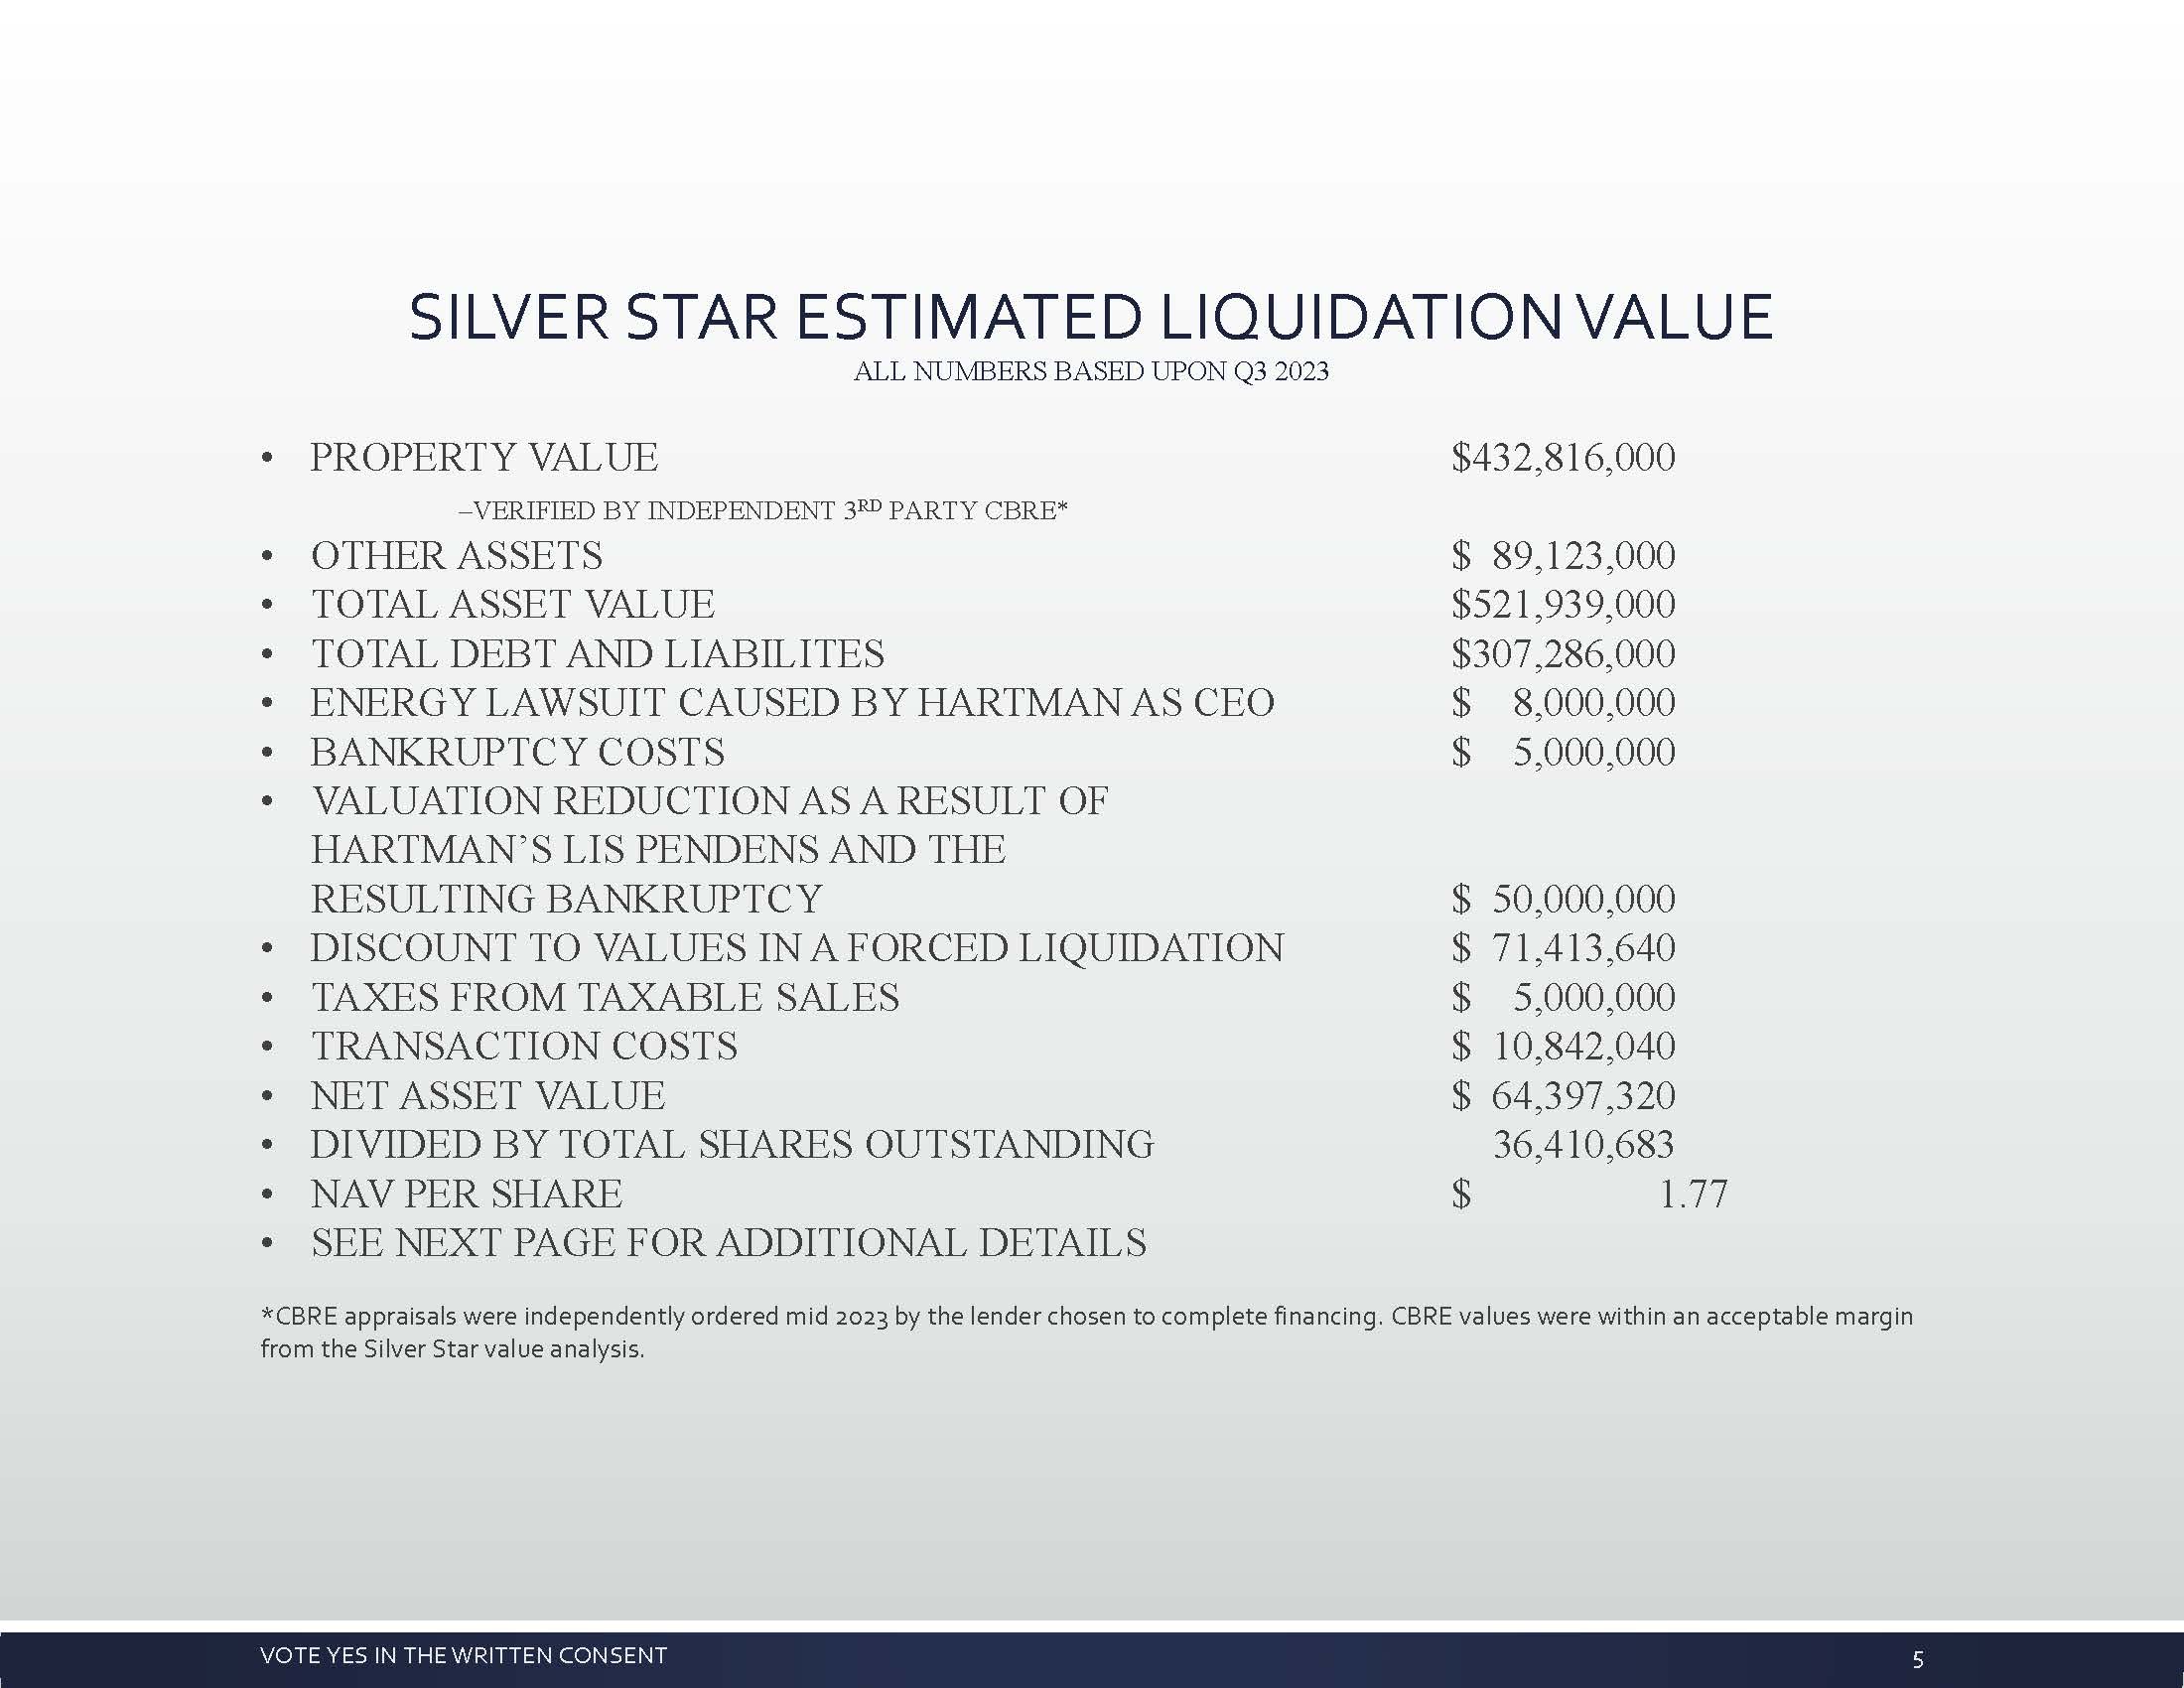 silverstarinvestordeckv2_pc.jpg